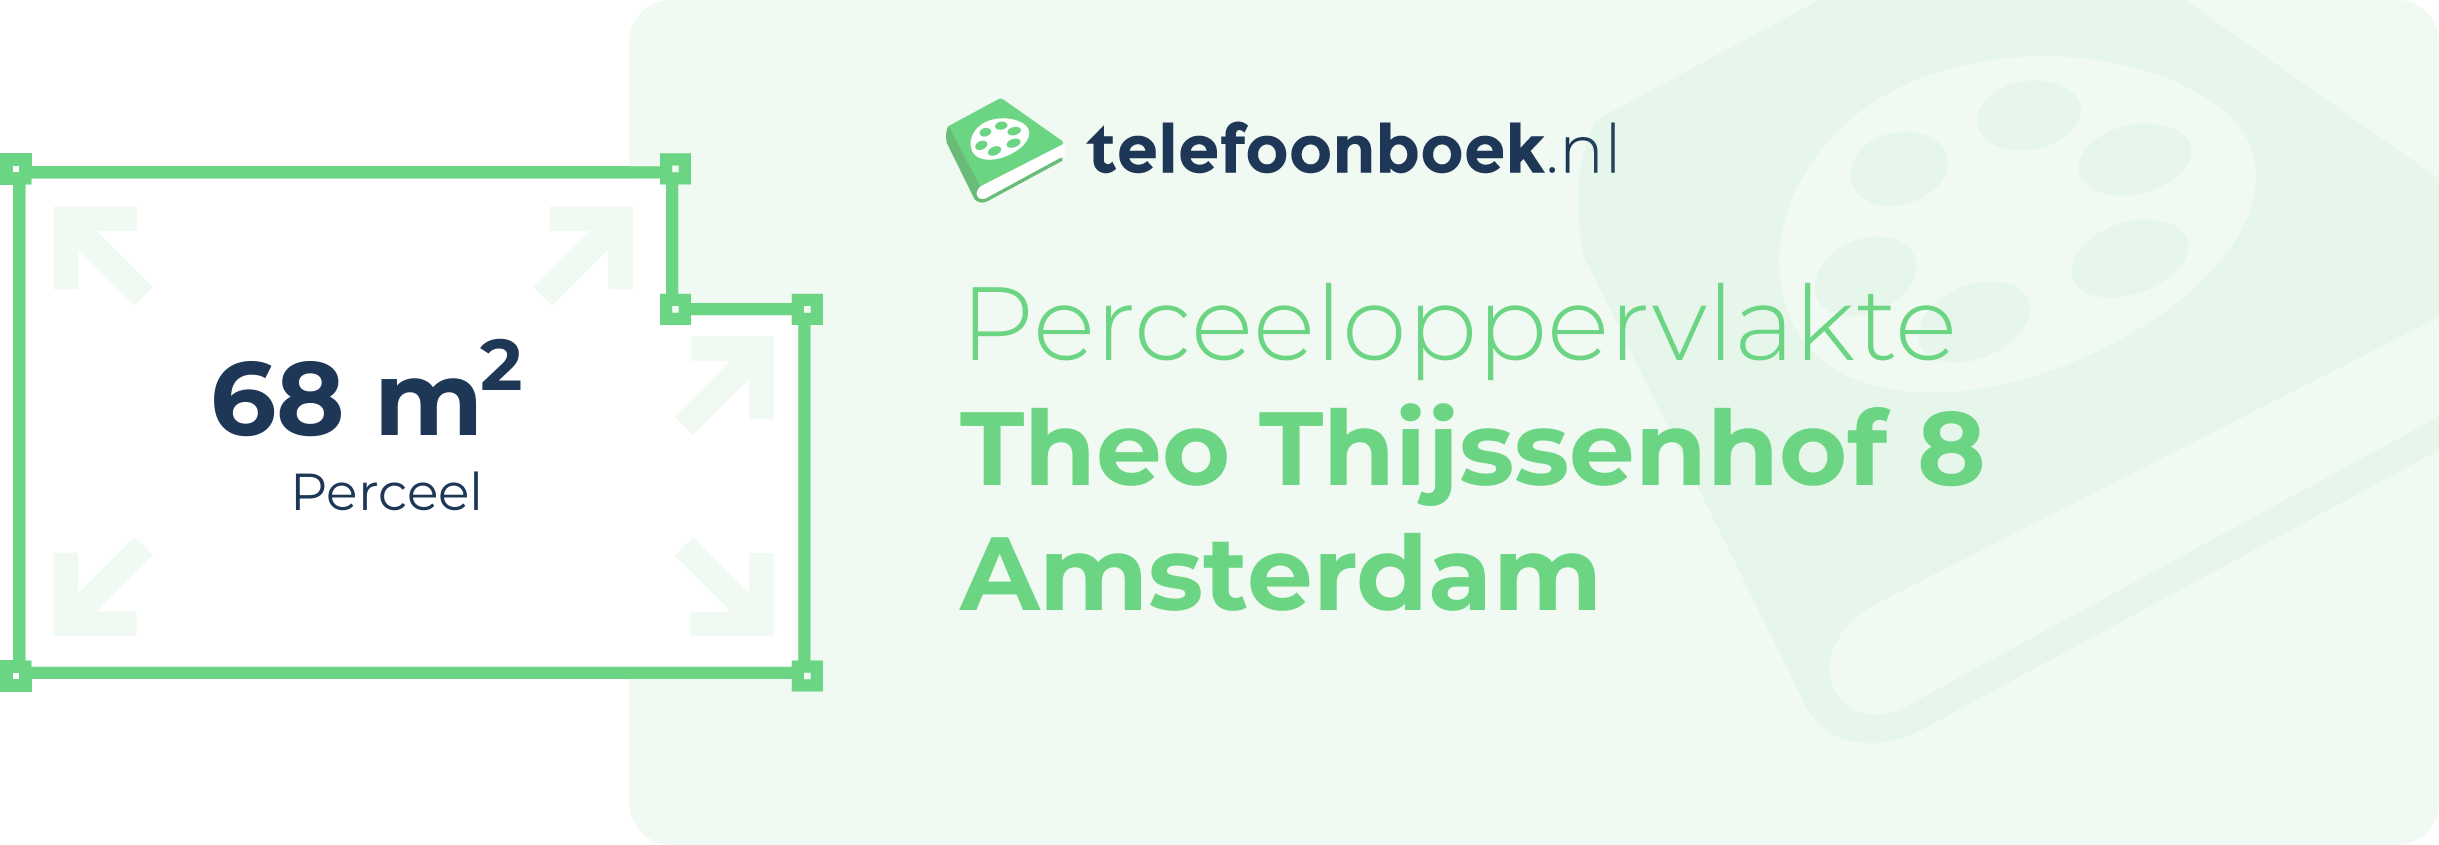 Perceeloppervlakte Theo Thijssenhof 8 Amsterdam